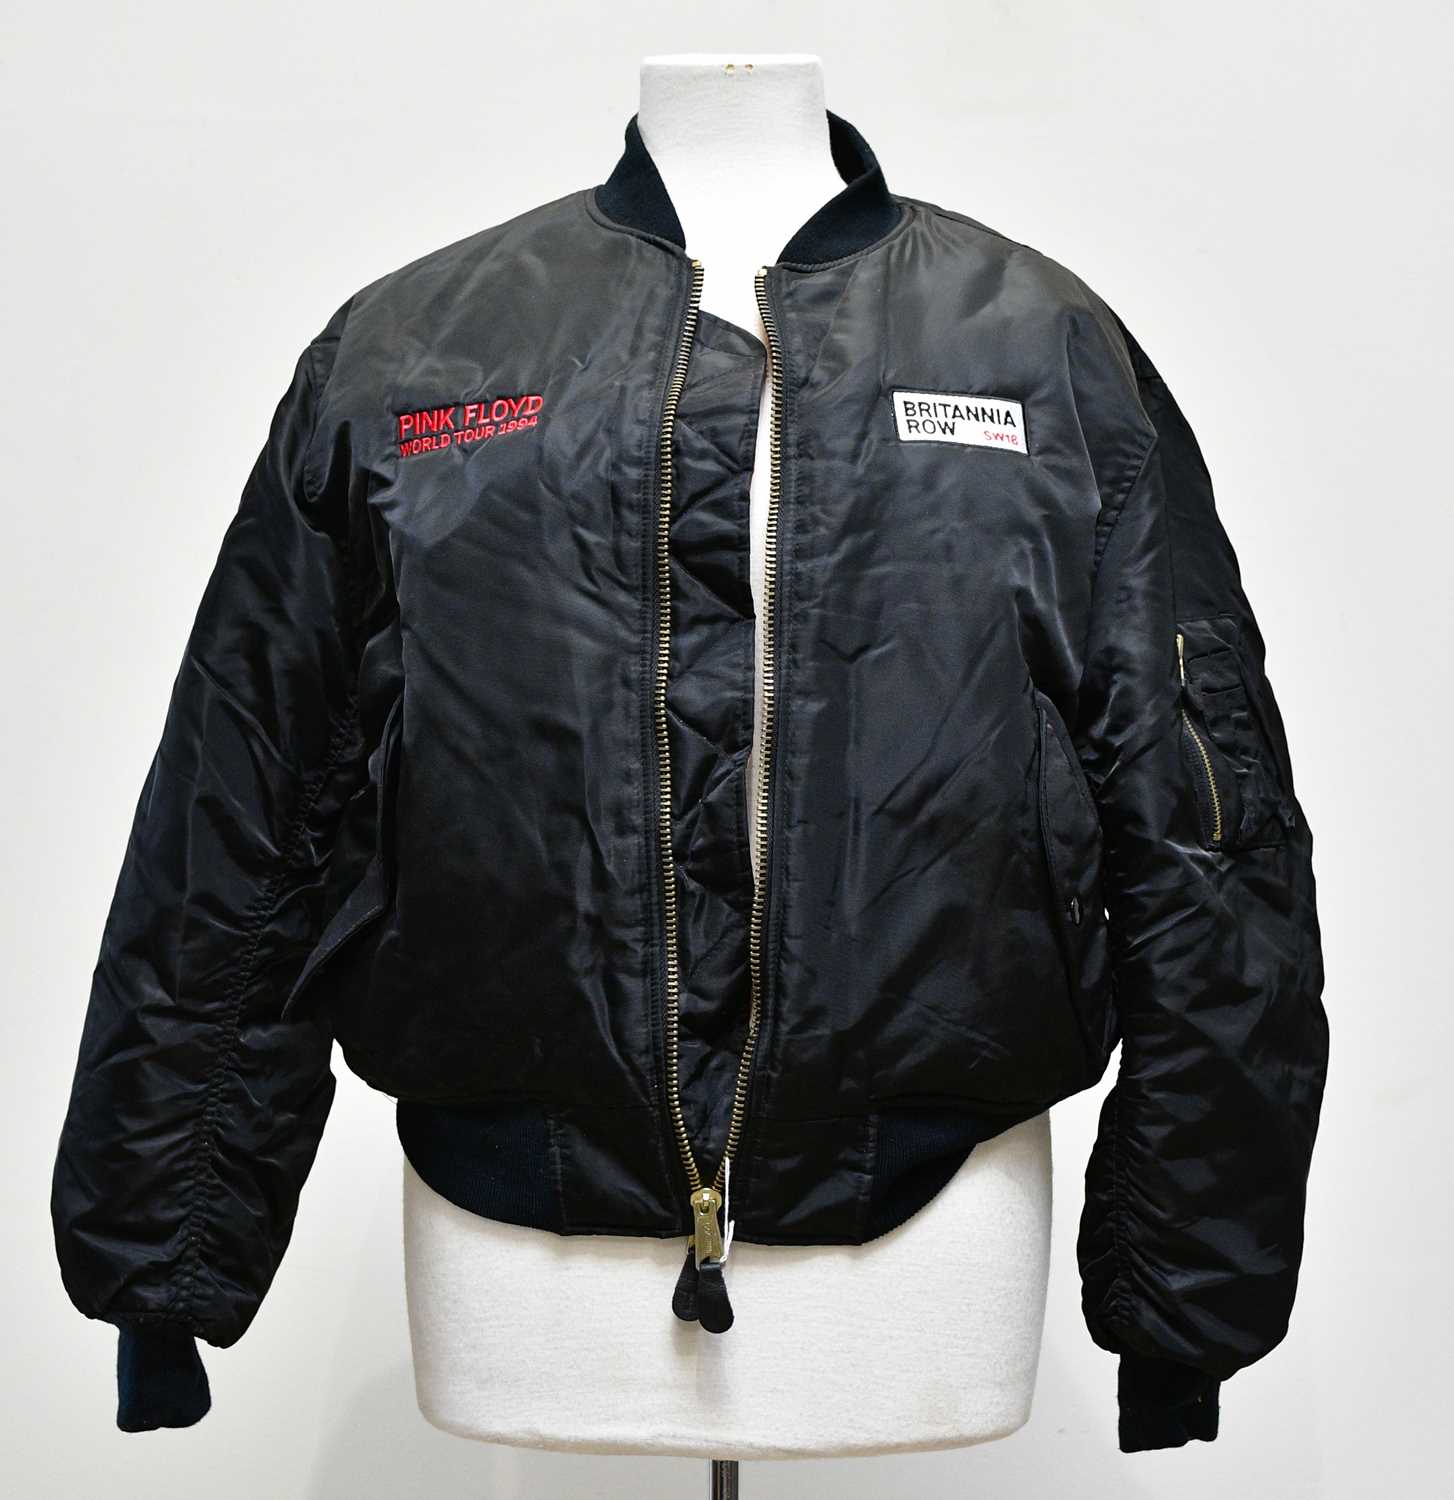 PINK FLOYD; a World Tour 1994 crew jacket.